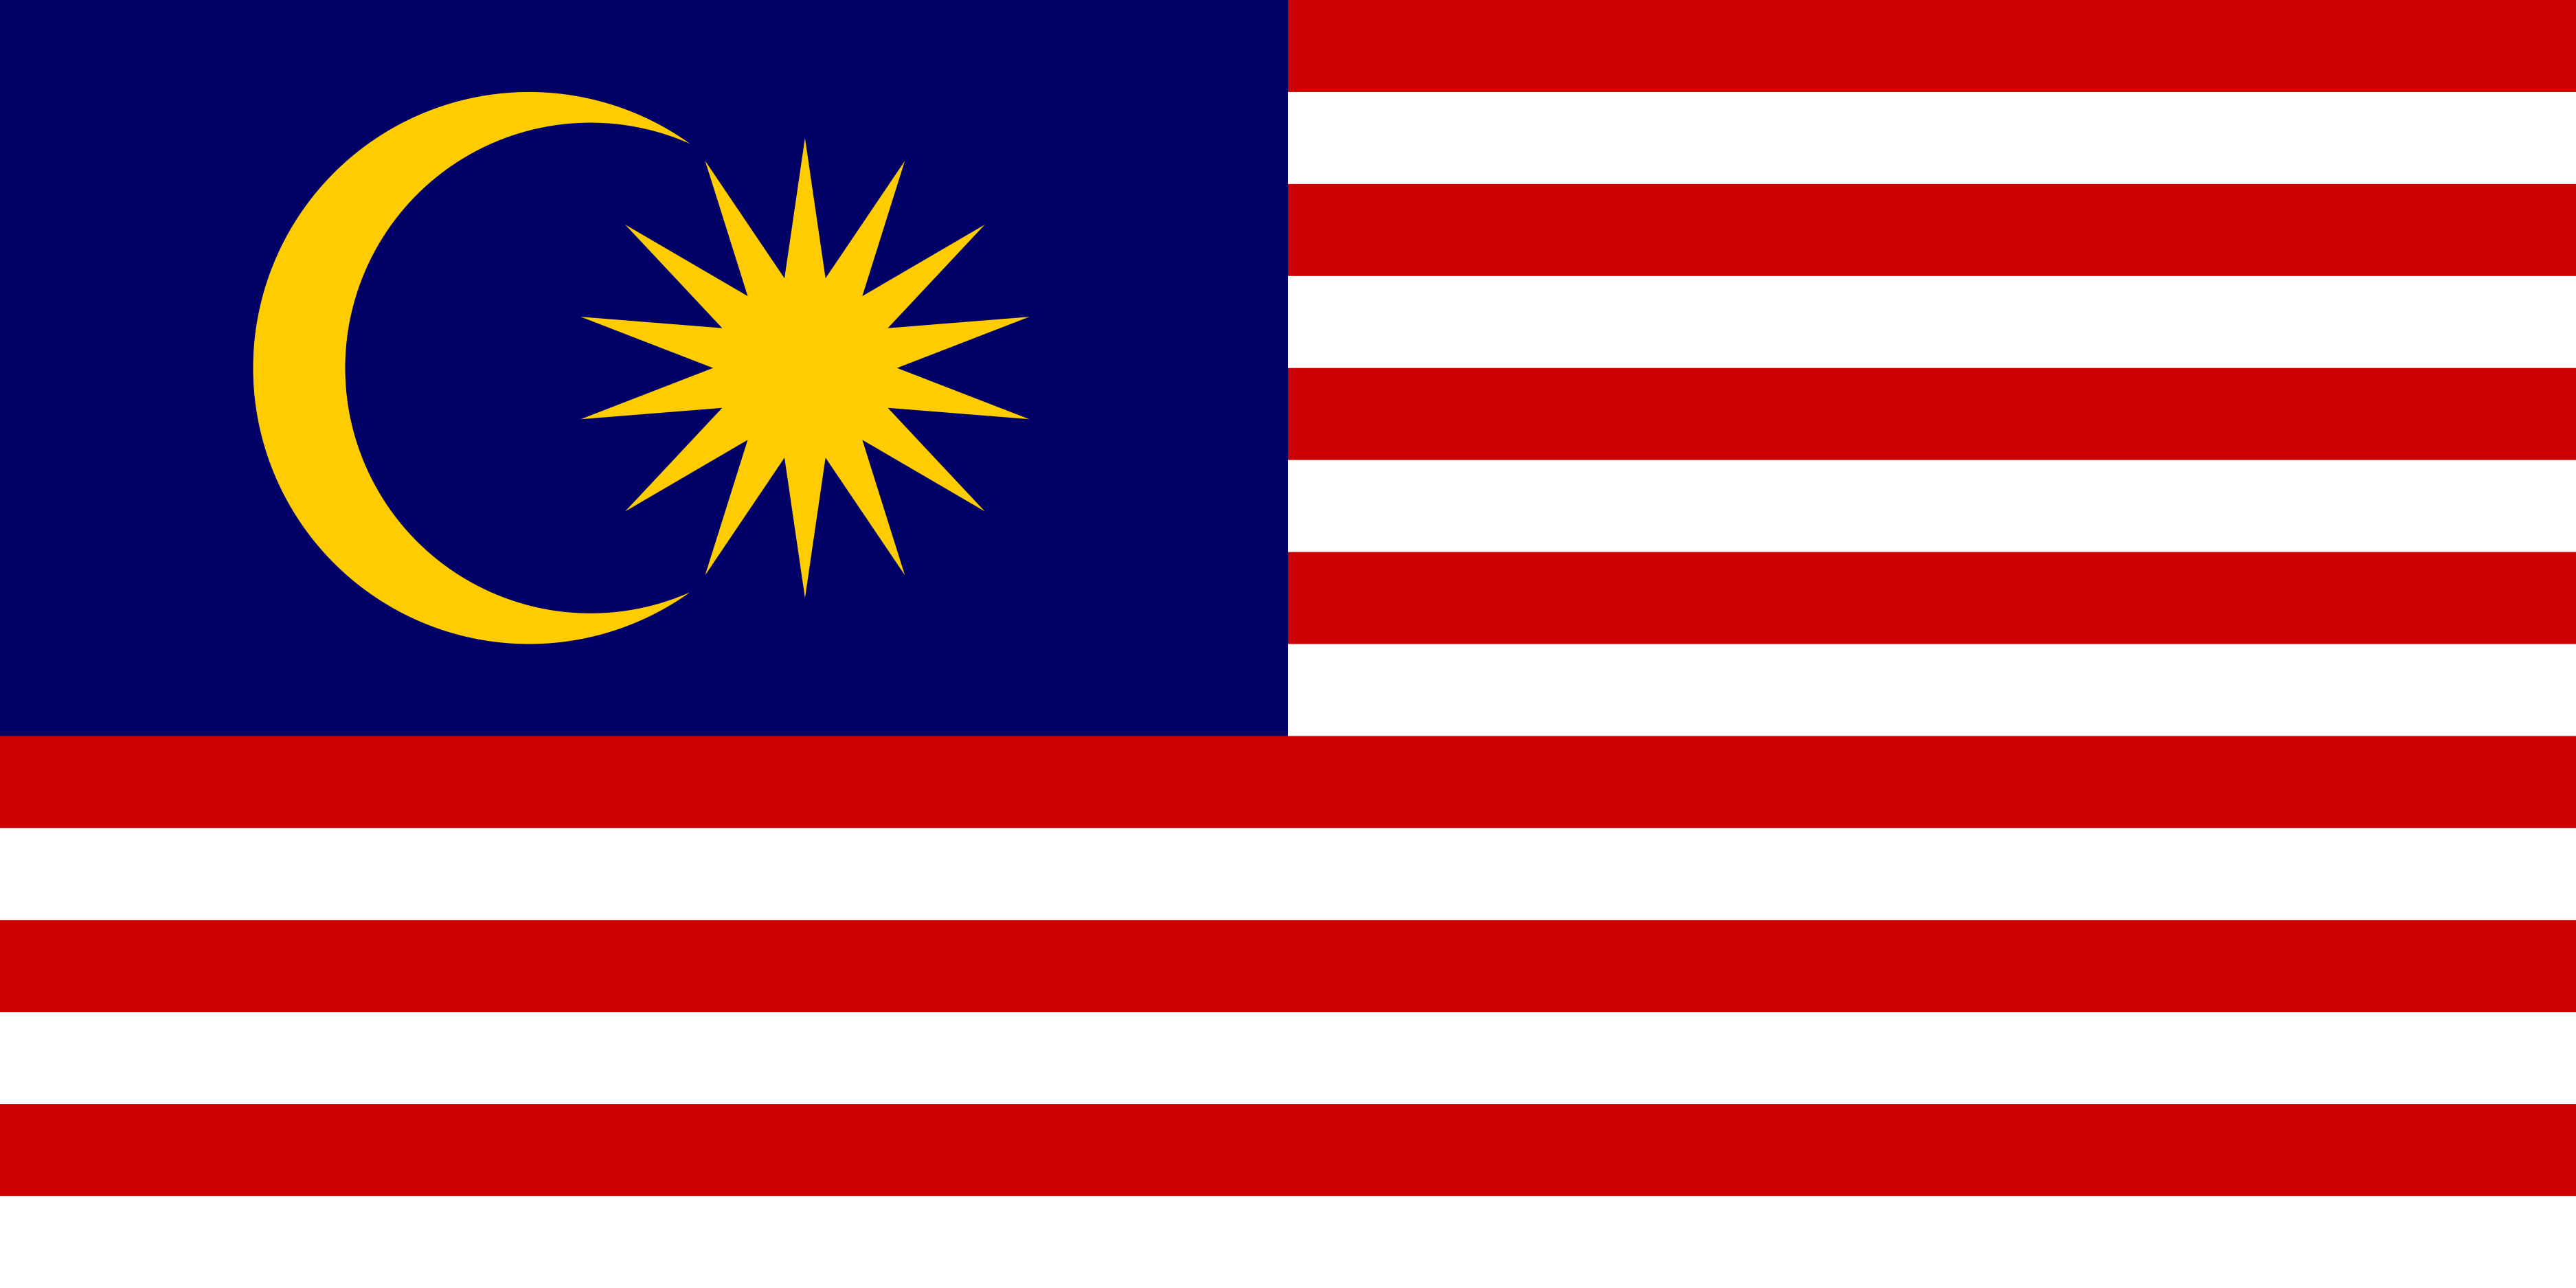 Malaysia Flag Image - Free Download